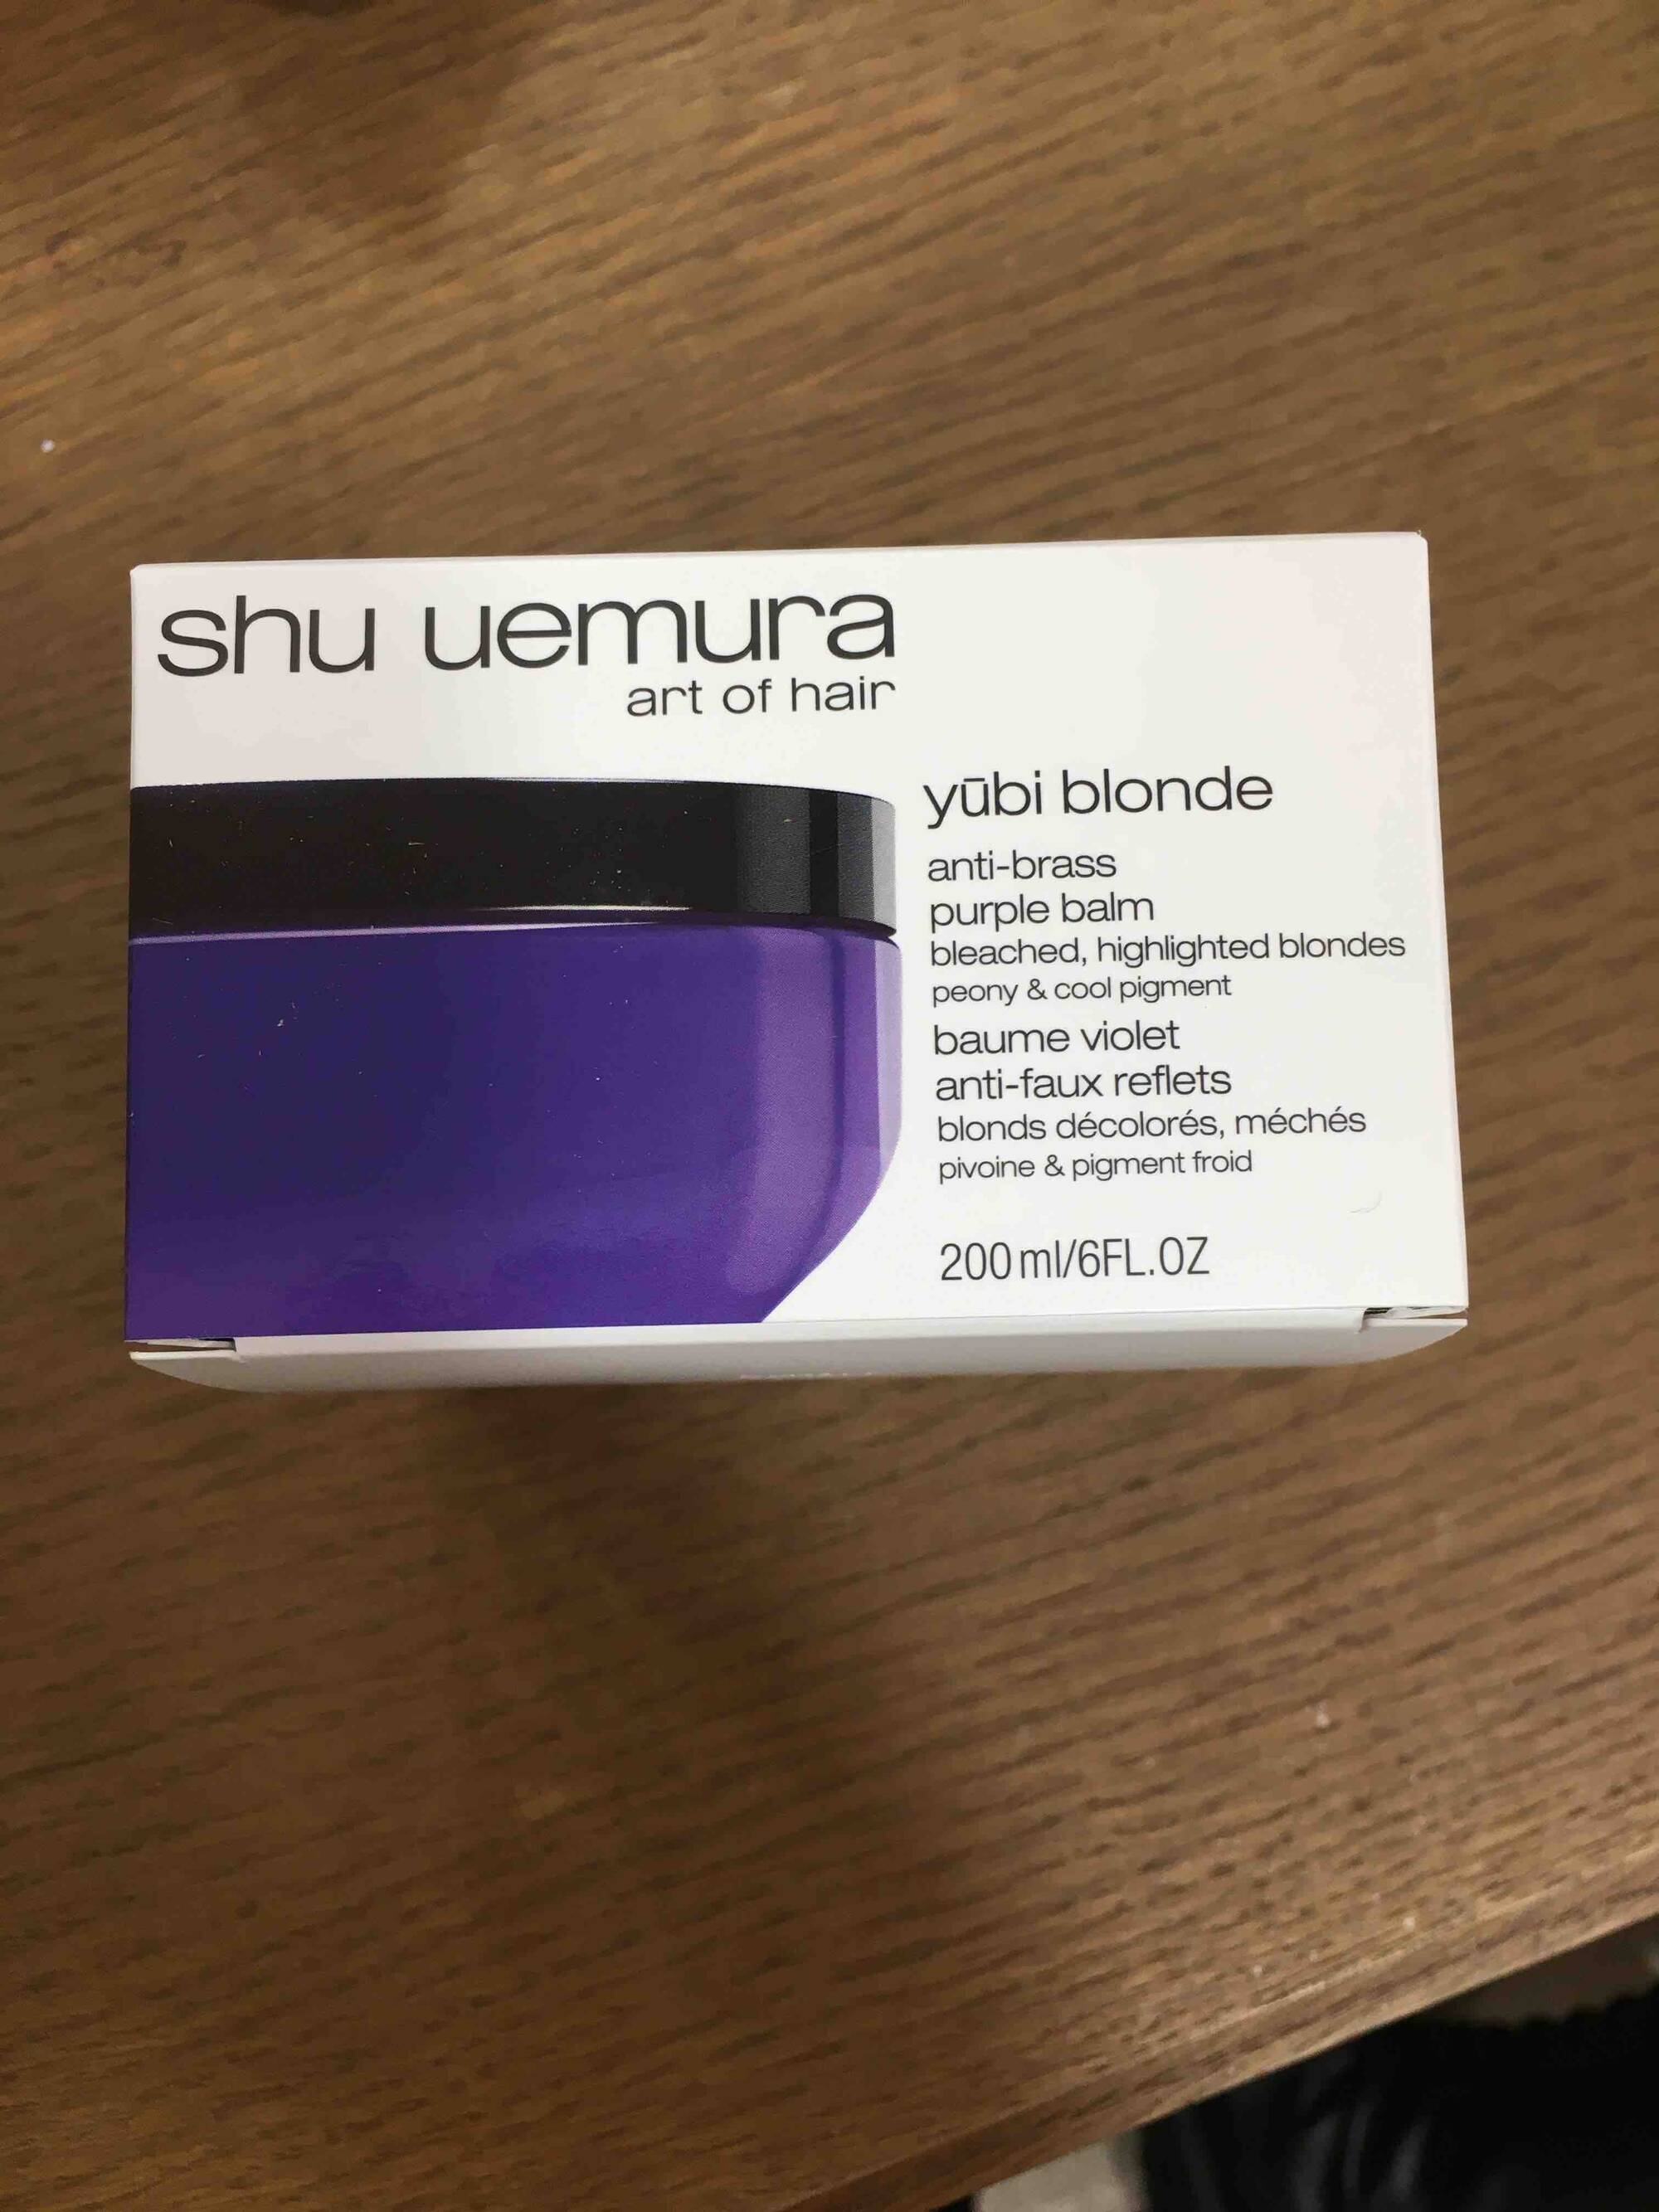 SHU UEMURA - Yubi blonde - Baume violet anti-faux reflets